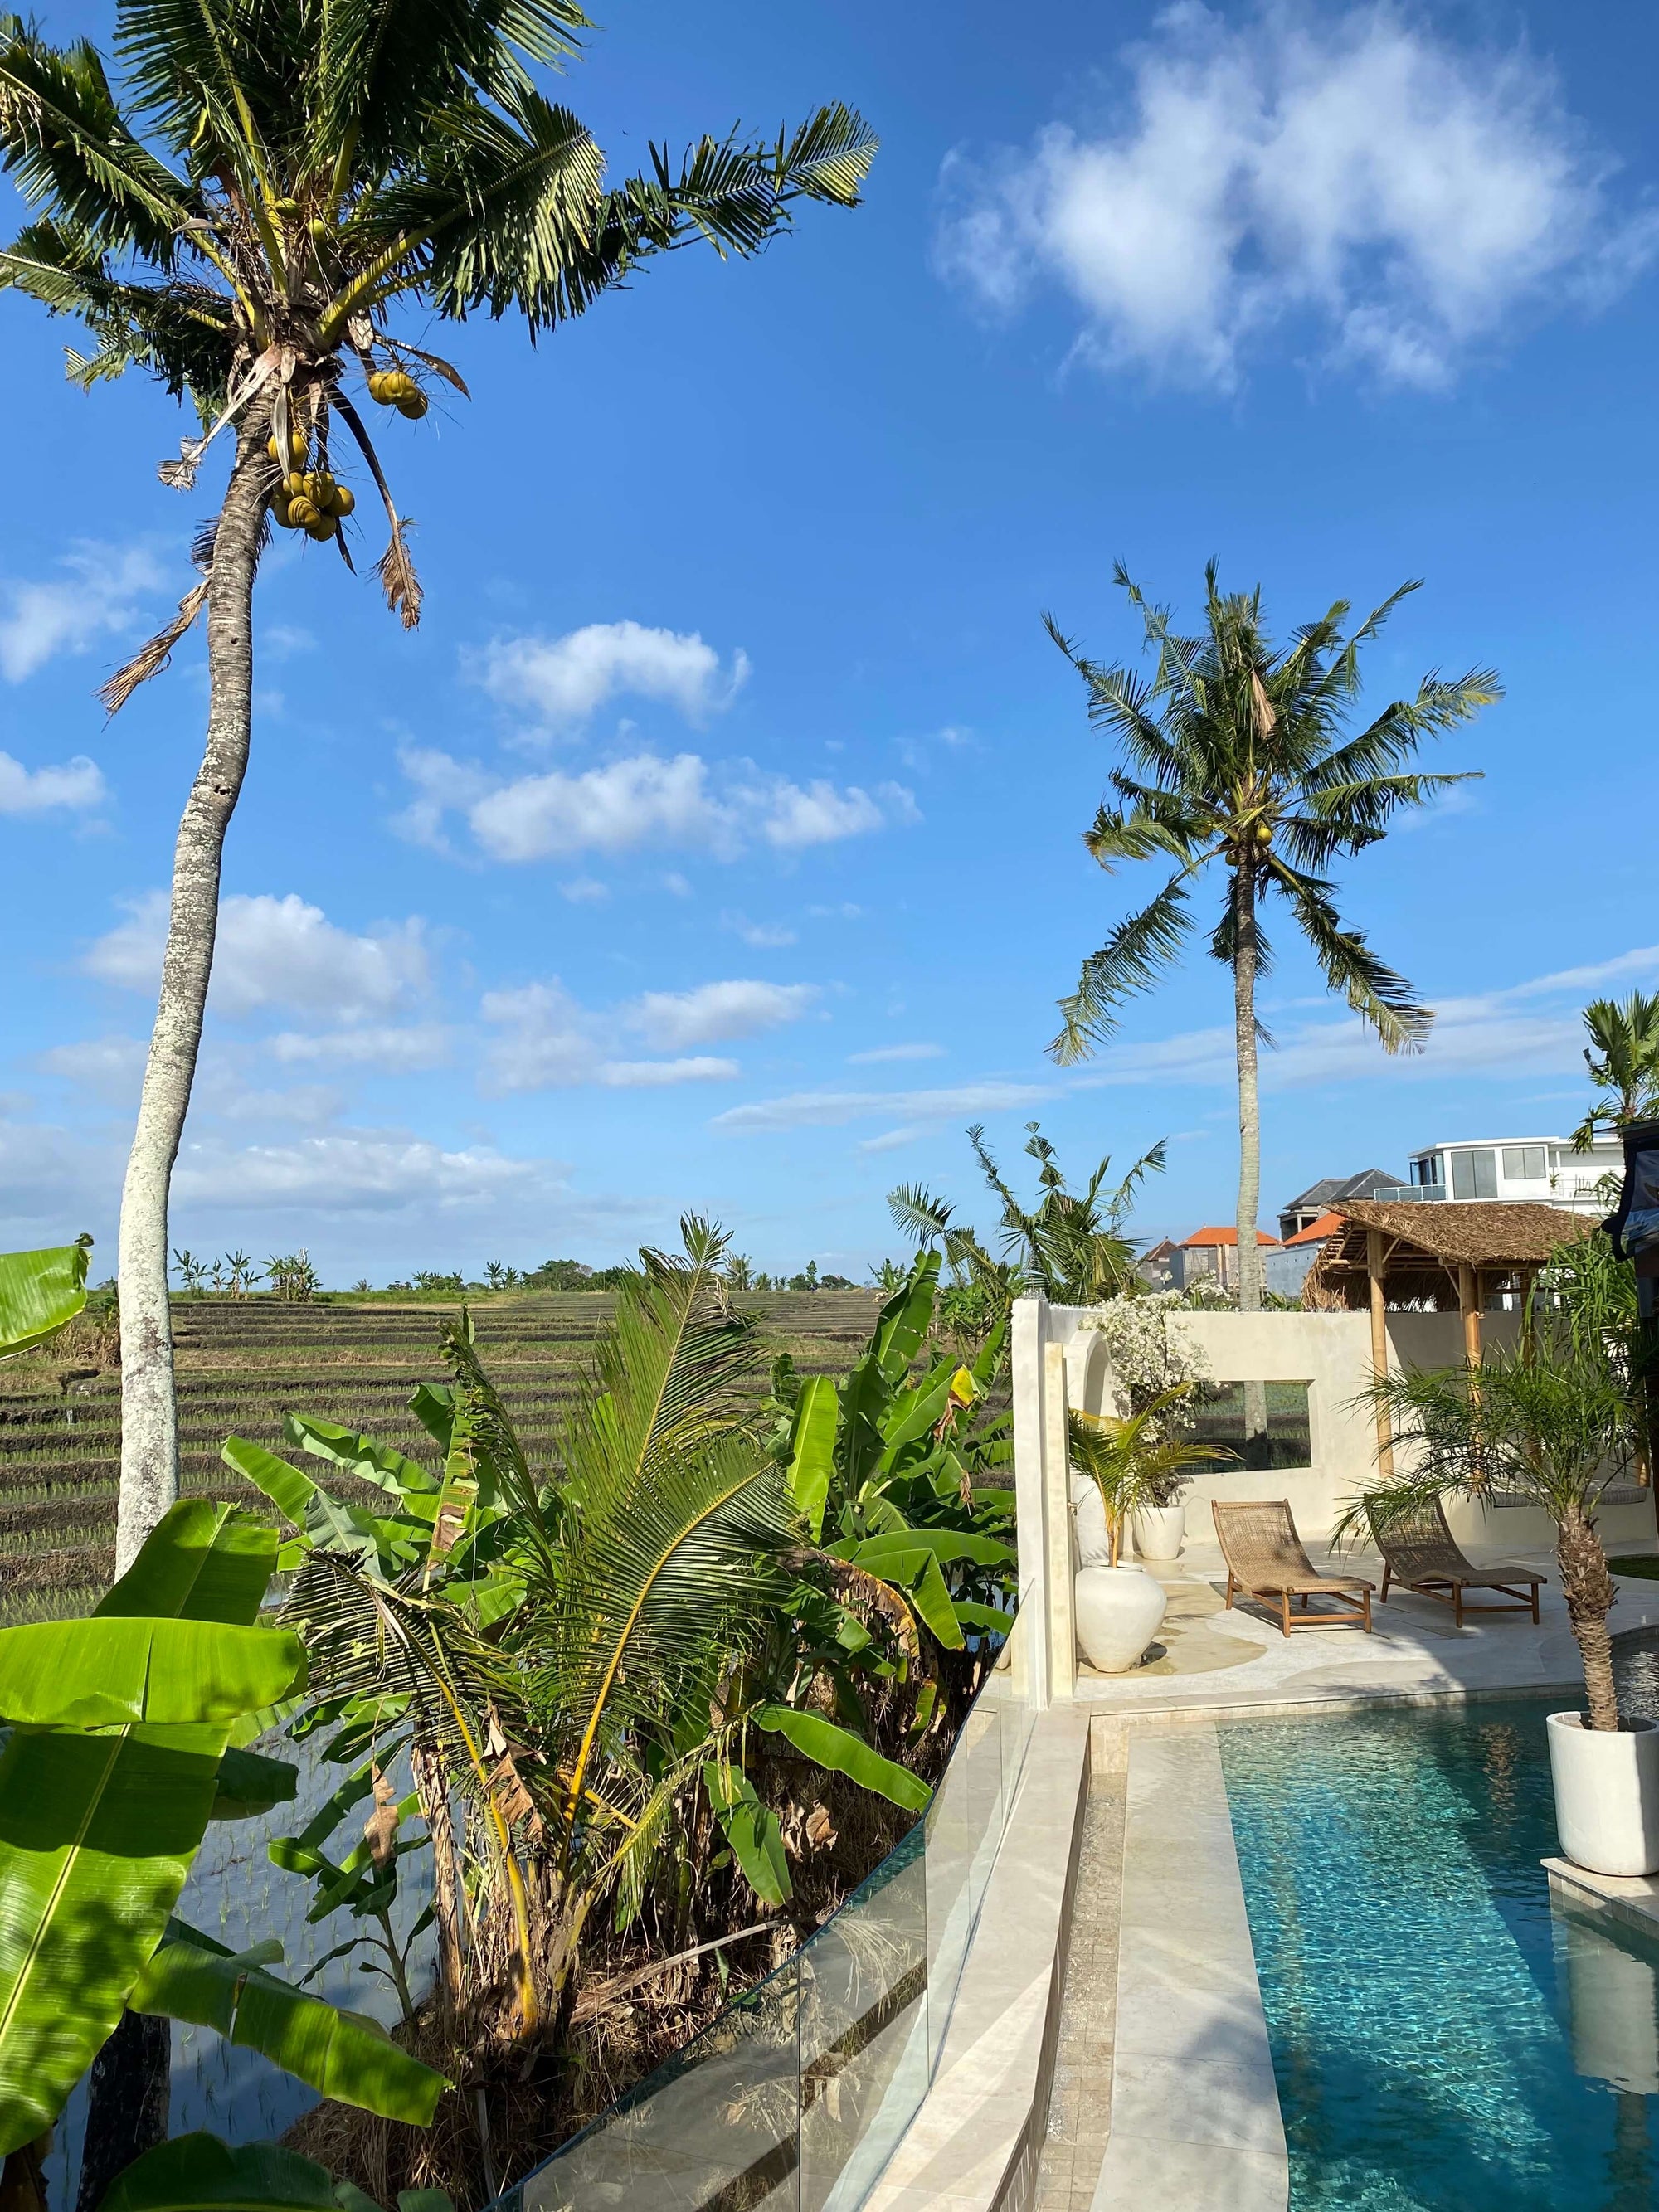 The dreamist Bali villa: Rumah Simba